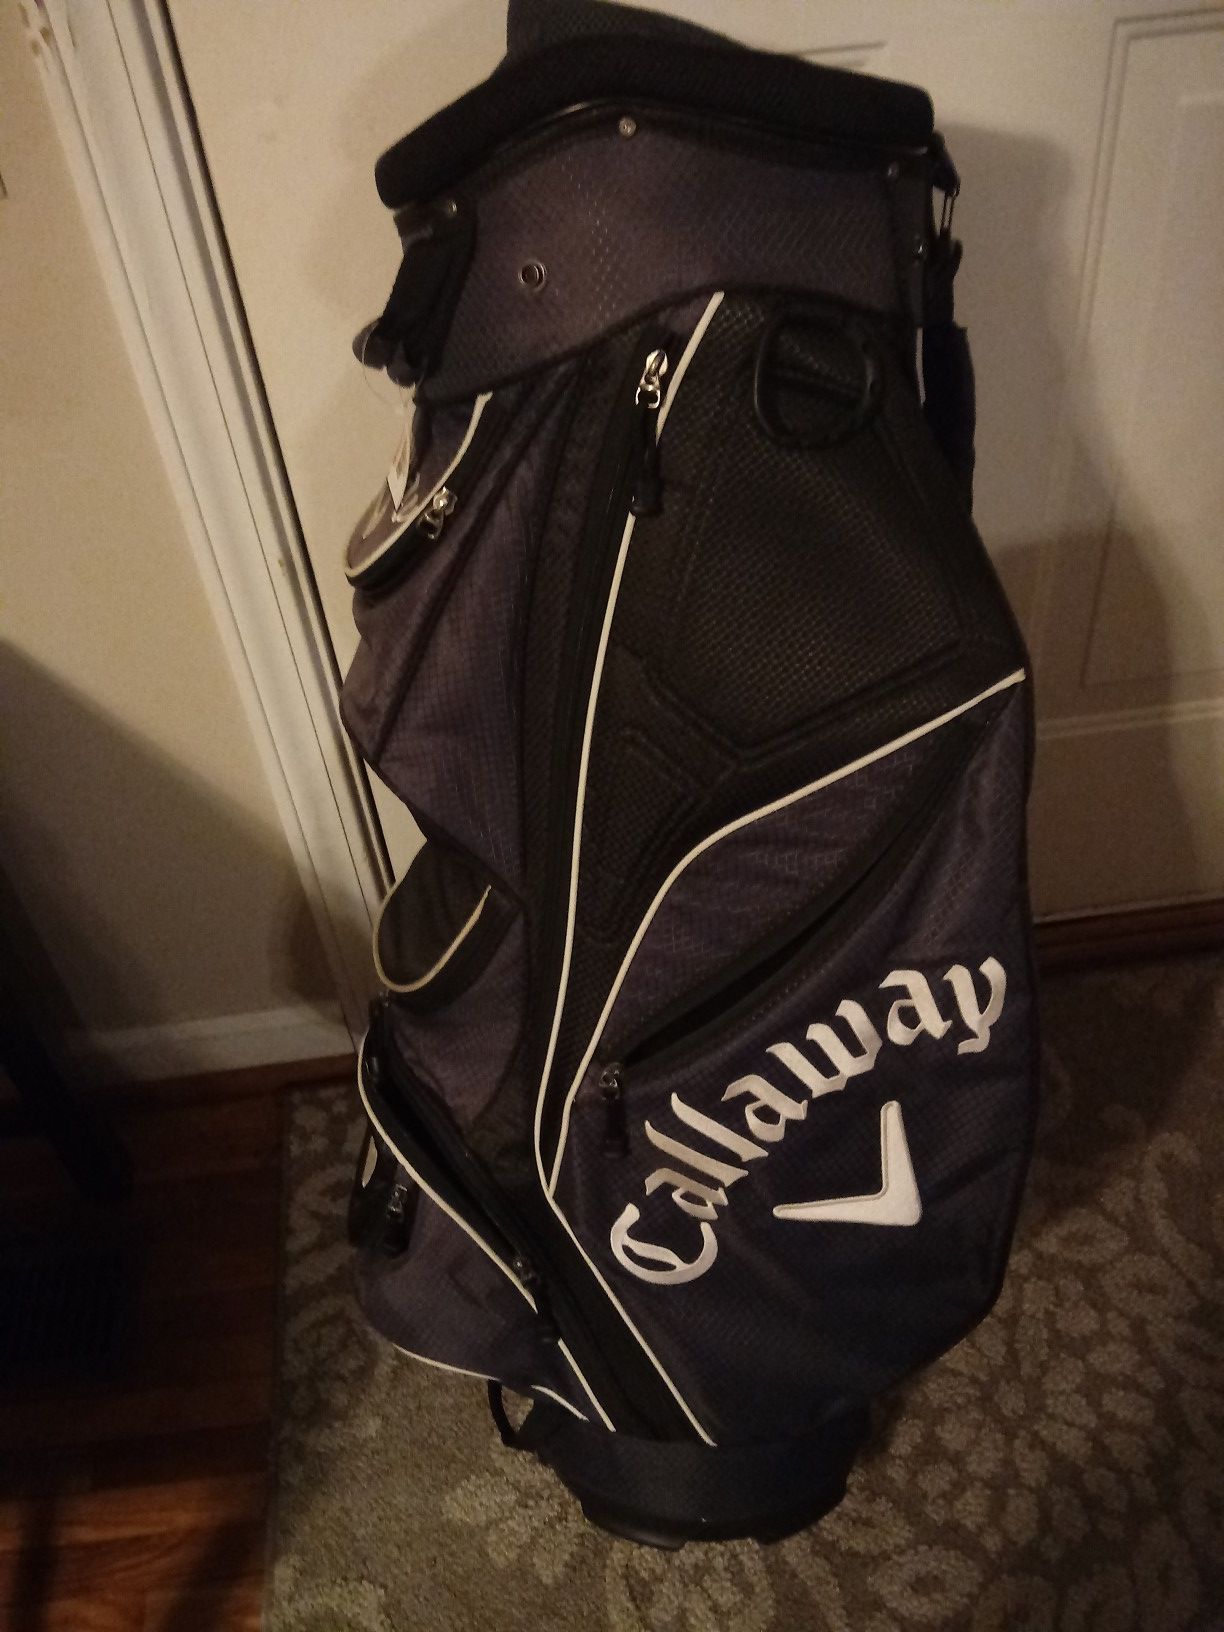 Brand new golf bag